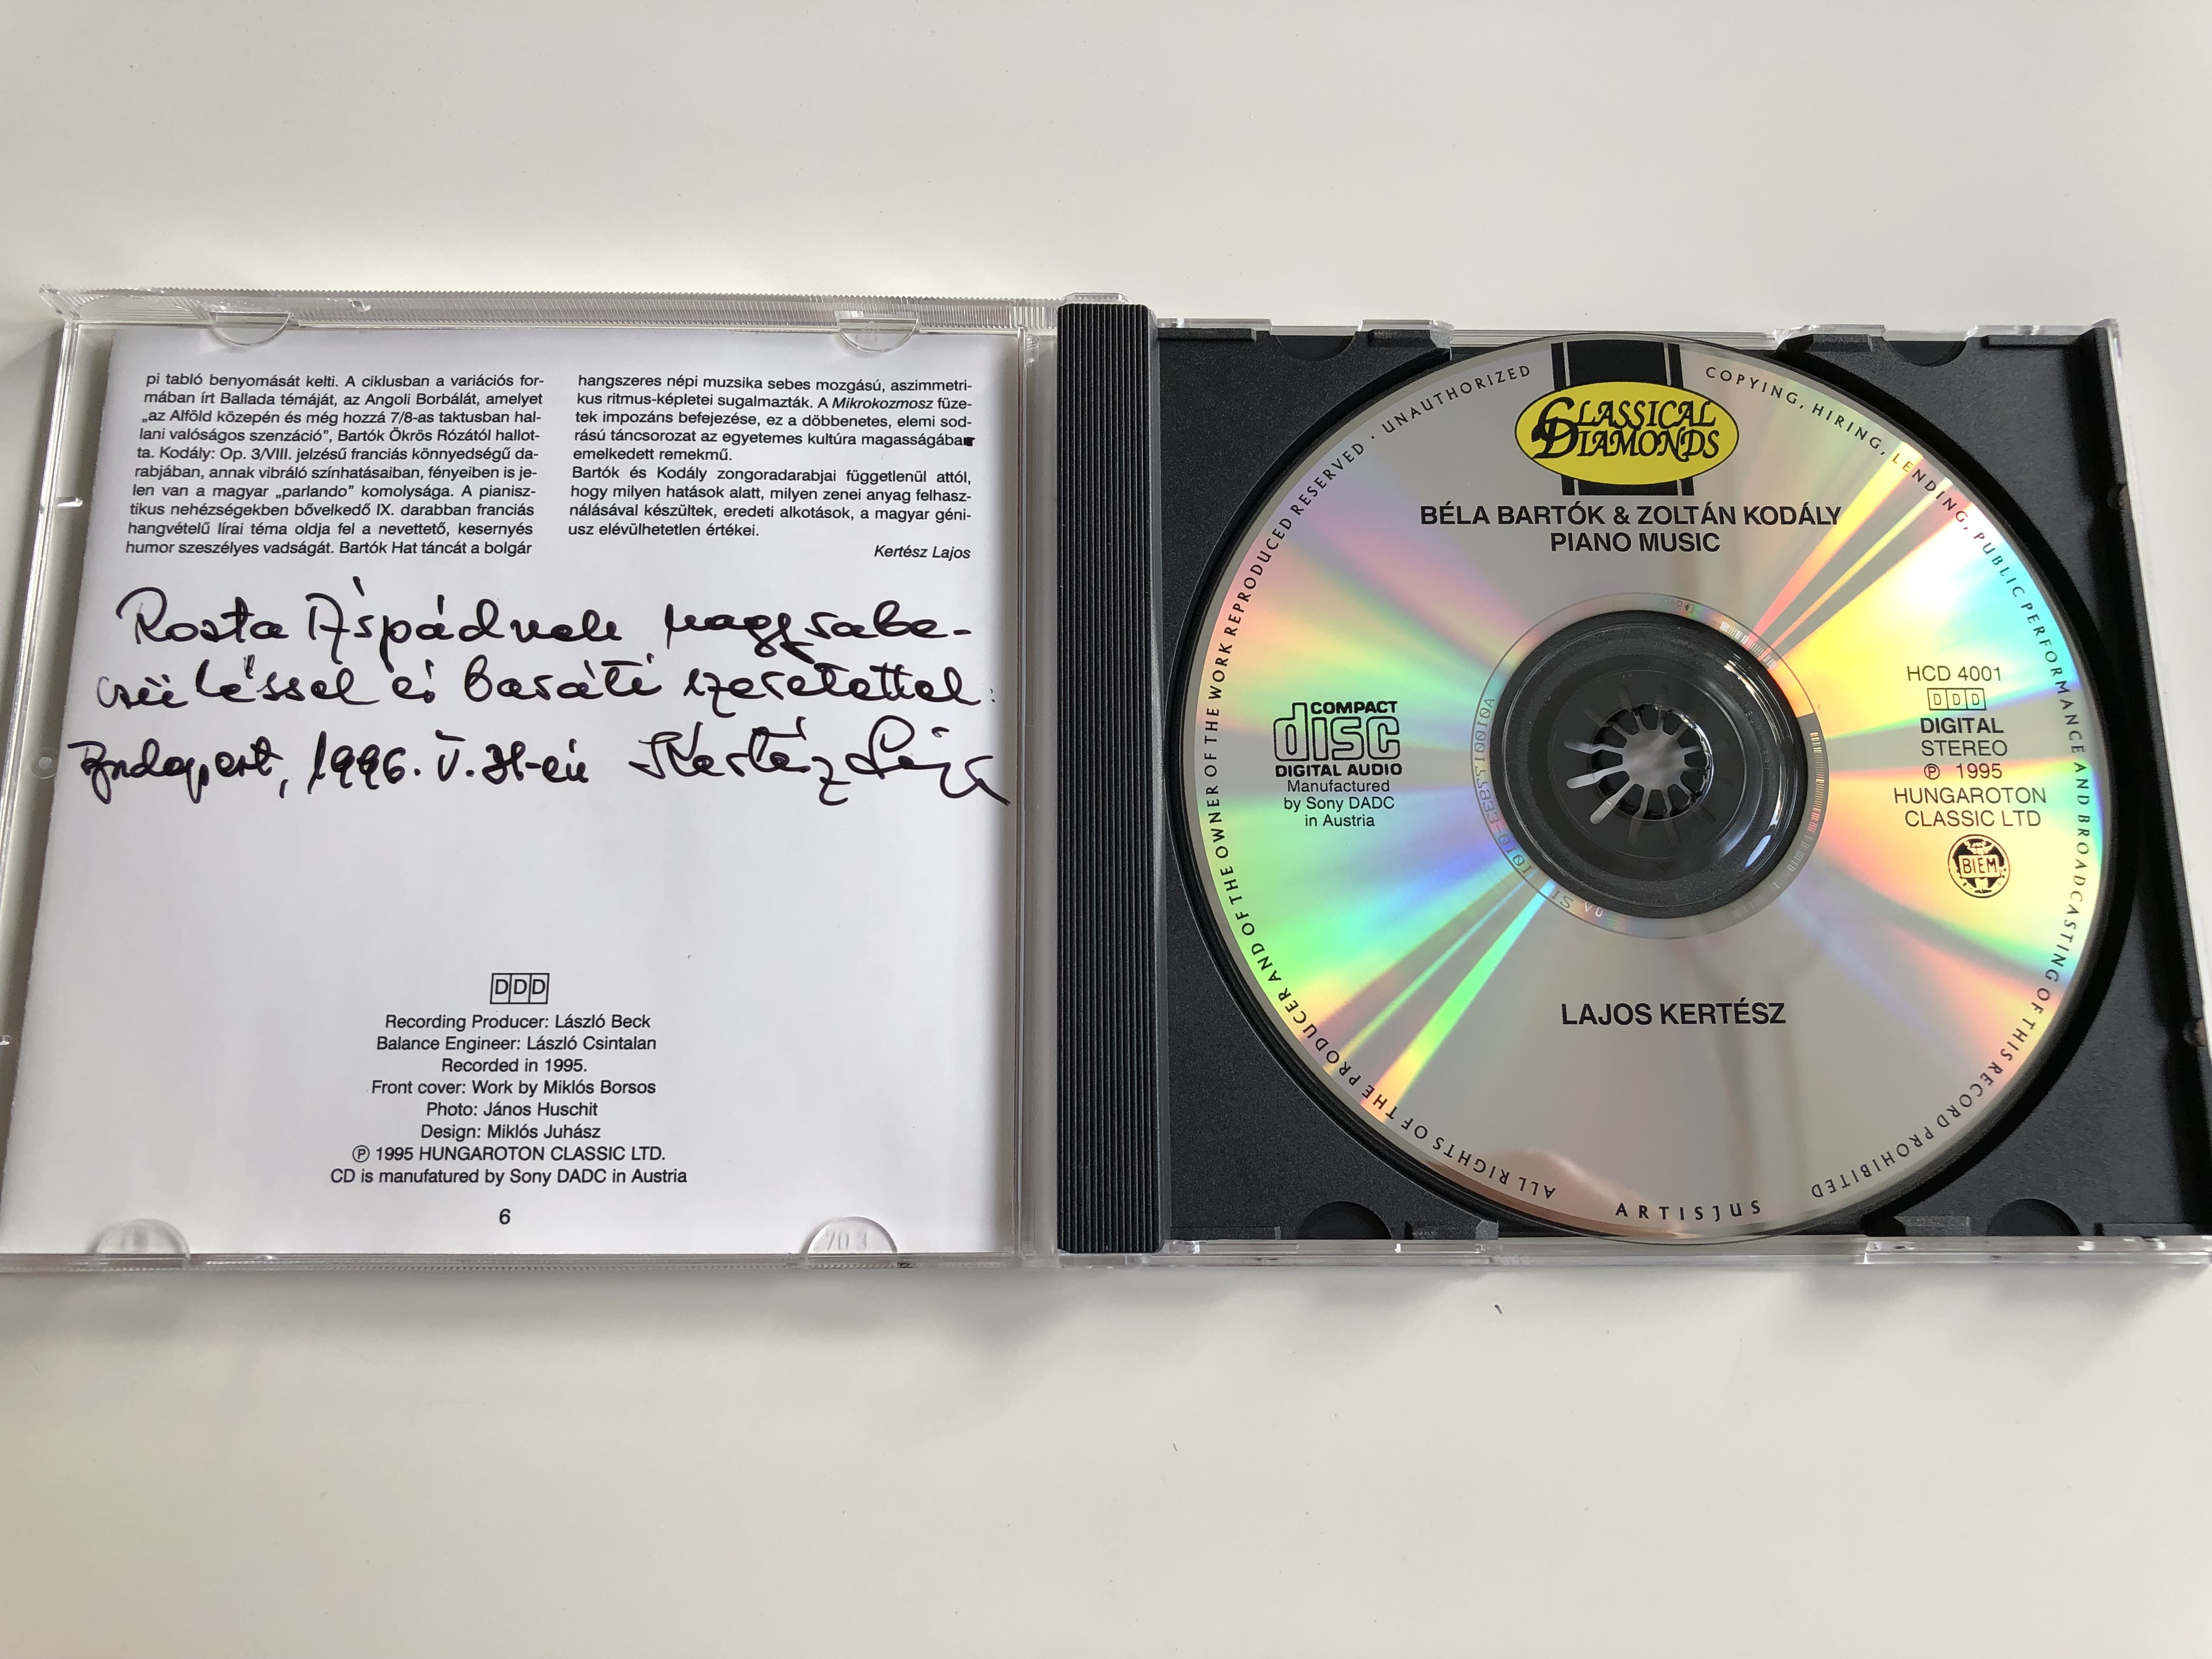 b-la-bart-k-zolt-n-kod-ly-piano-music-lajos-kert-sz-piano-hungaroton-classic-audio-cd-1995-hcd-4001-6-.jpg